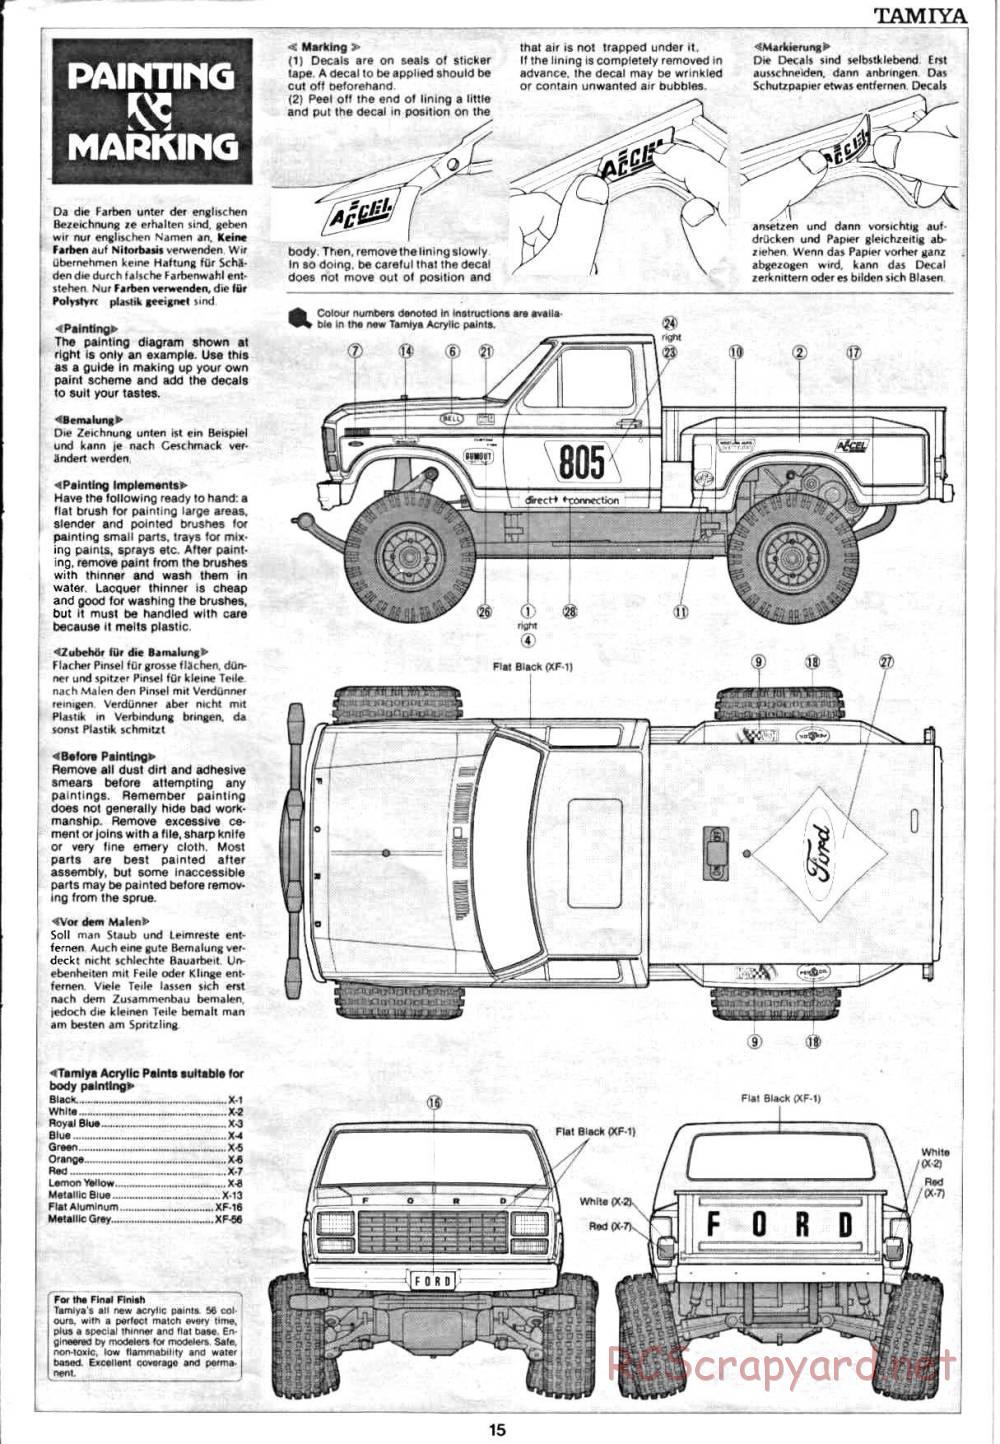 Tamiya - Ford F-150 Ranger XLT - 58027 - Manual - Page 15